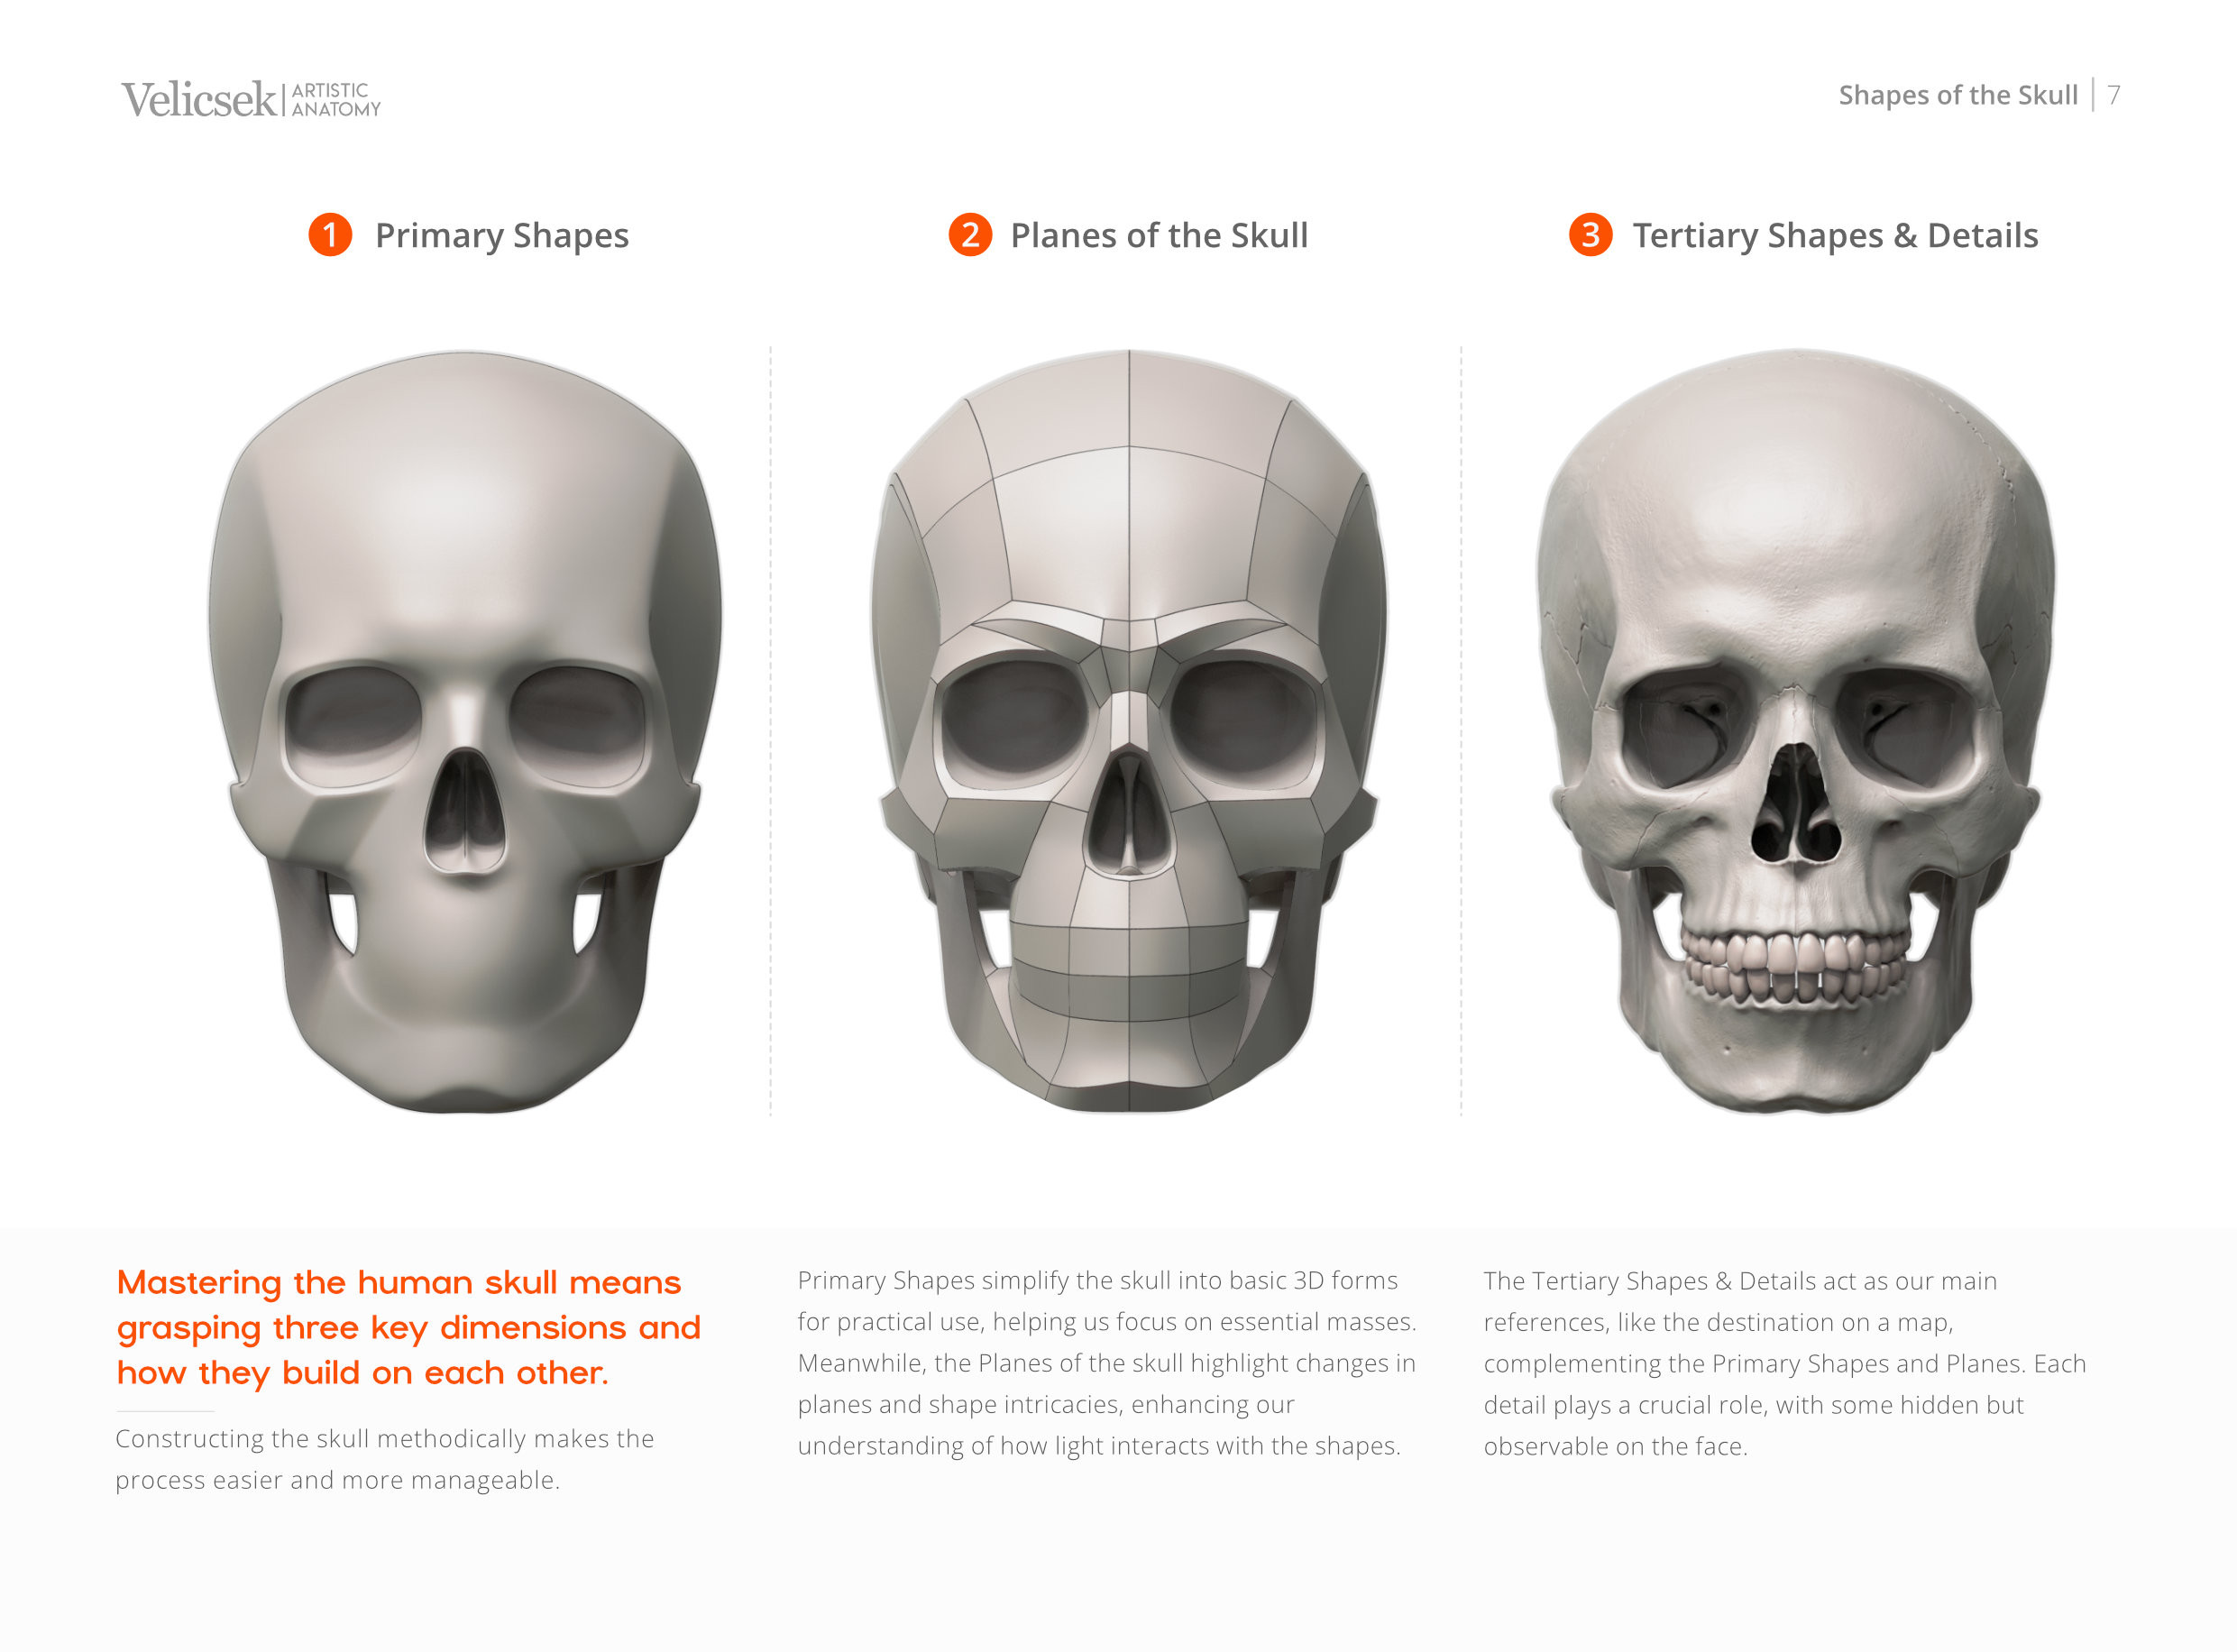 Gusztav Velicsek - Visual Reference of the Human Skull (Free E-book)